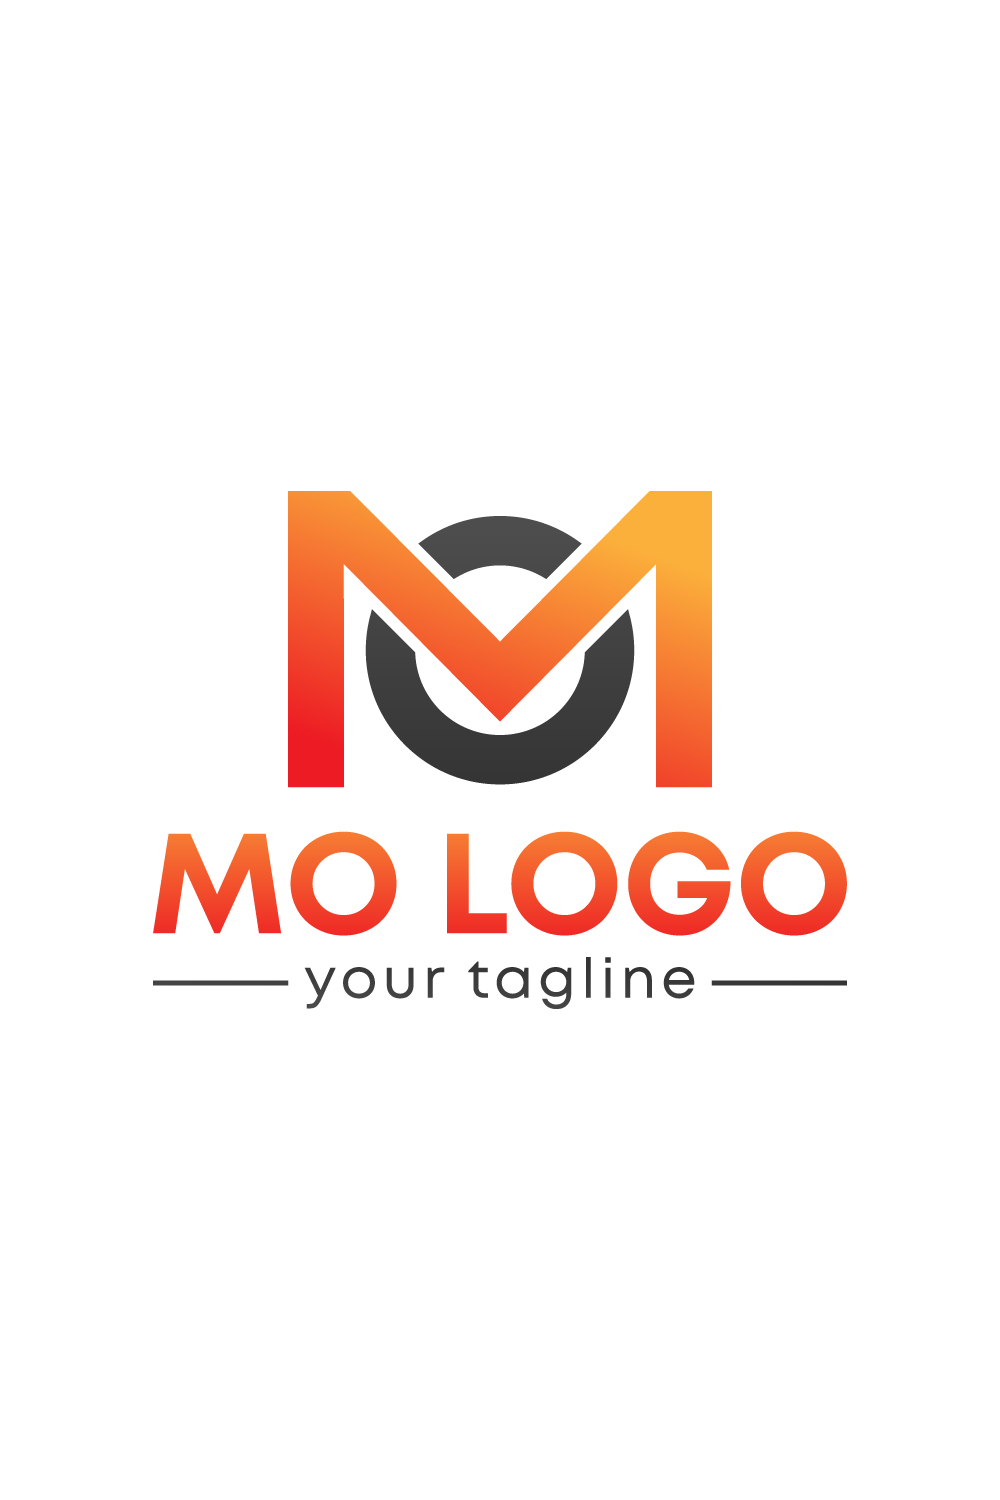 MO logo design pinterest preview image.